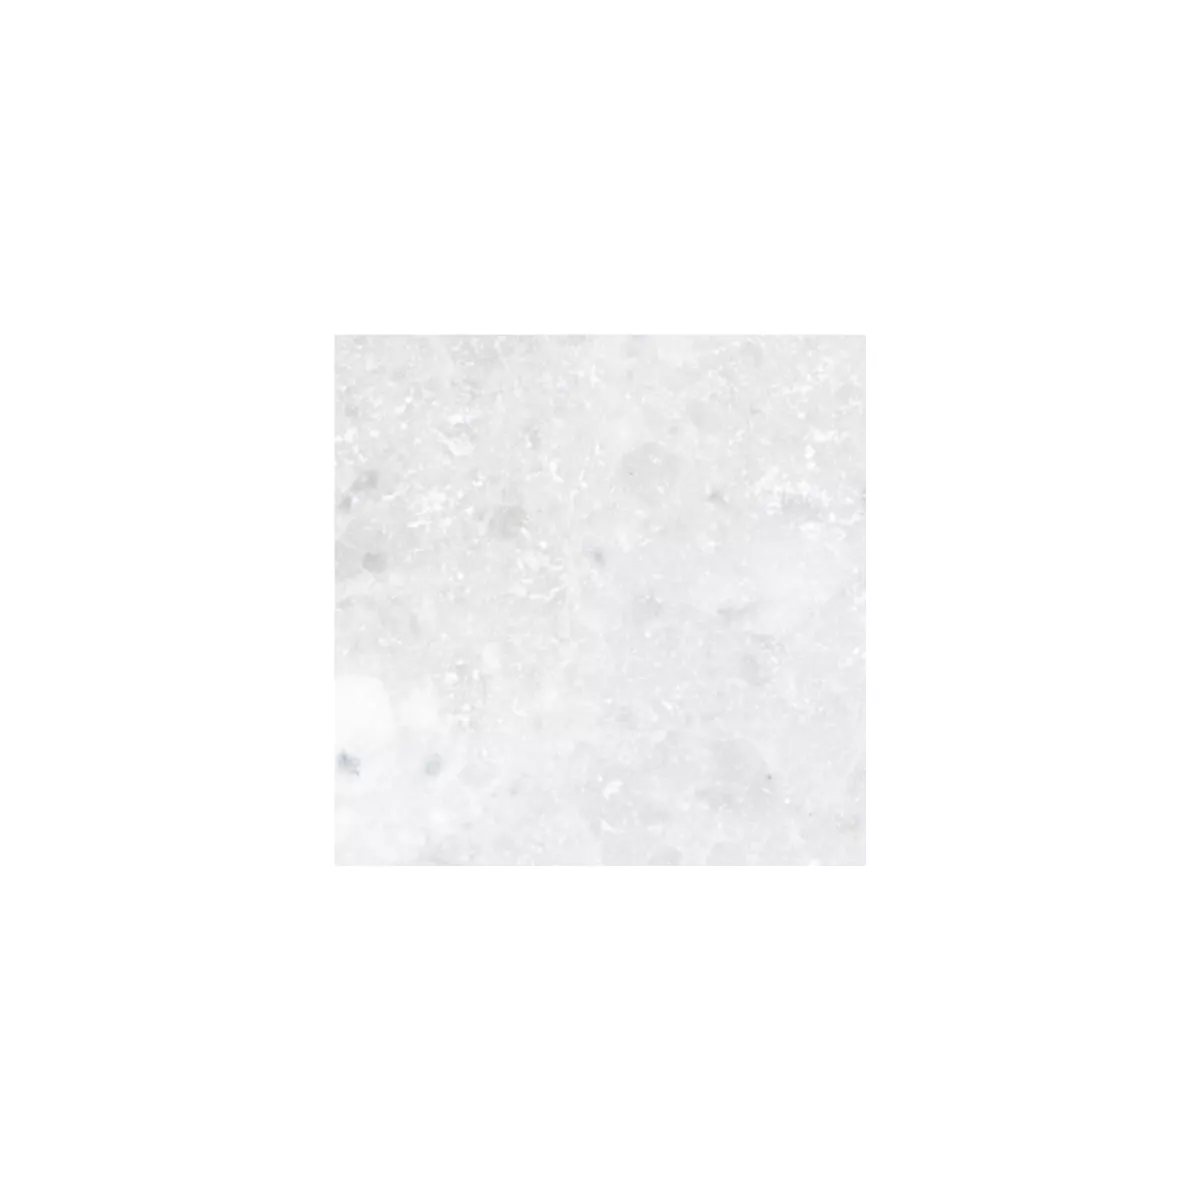 Vzorek Dlaždice Z Přírodního Kamene Mramor Treviso Bílá 10x10cm